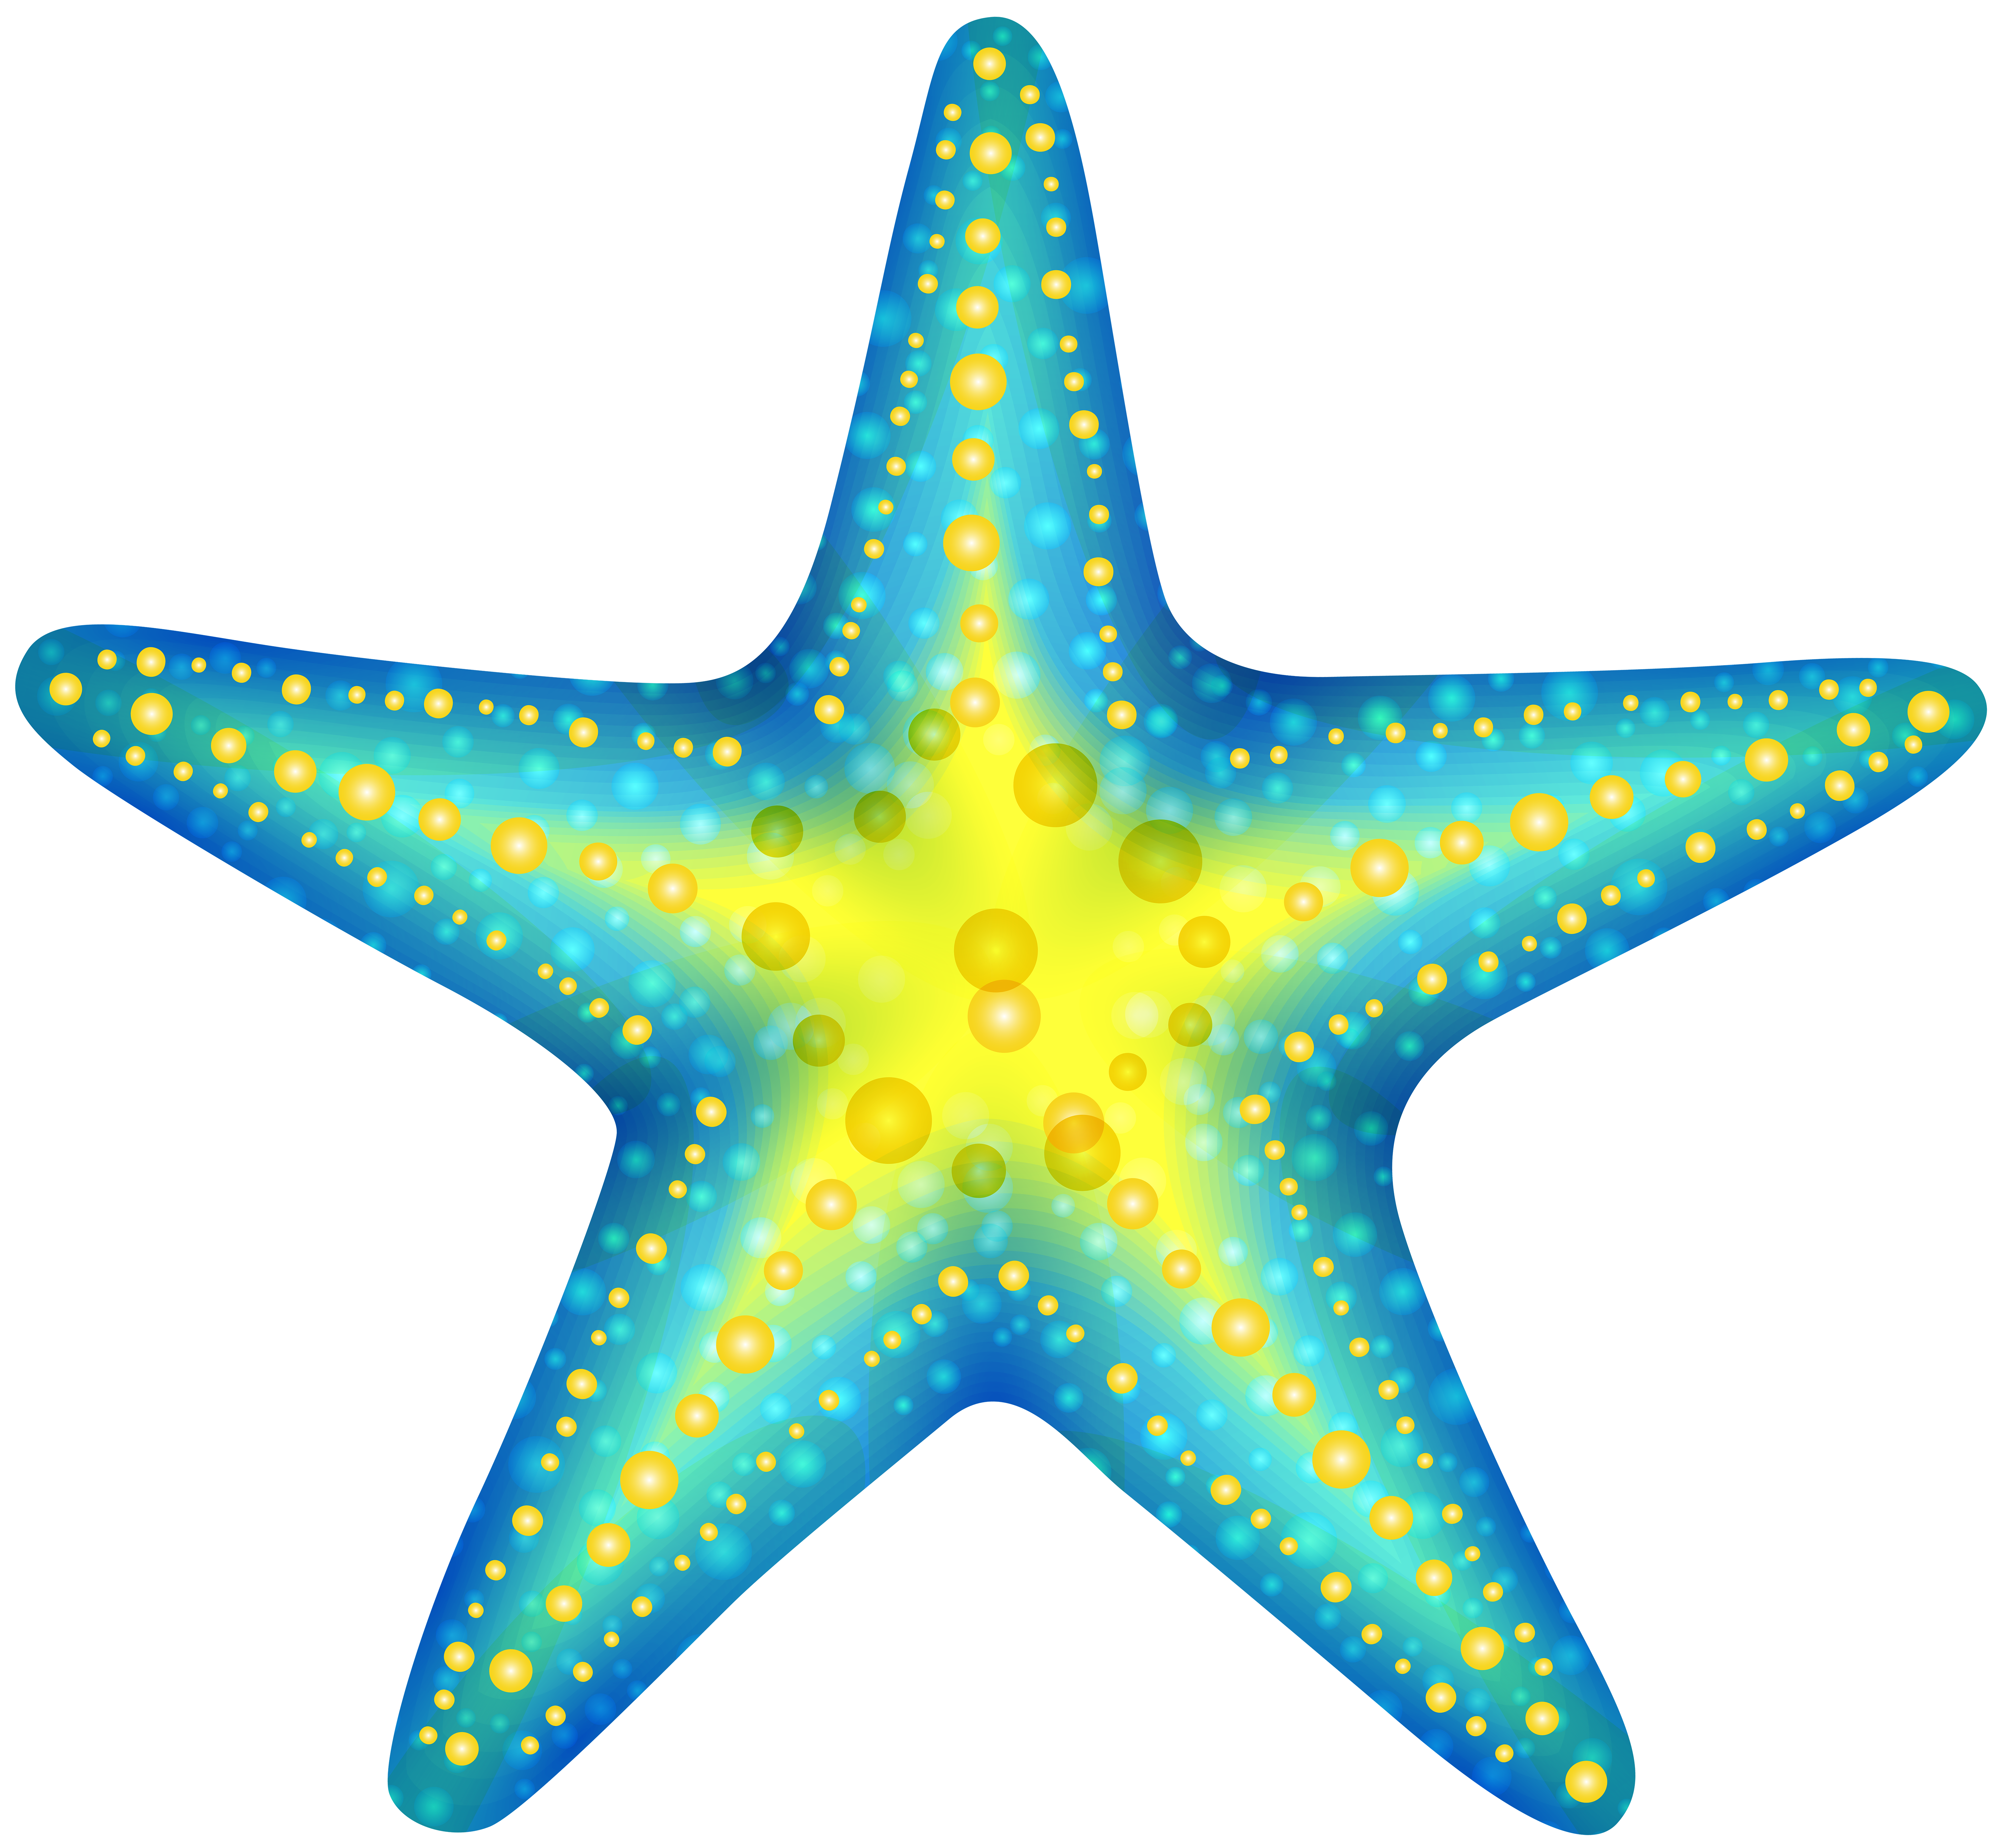 Blue Starfish PNG Clip Art - Best WEB Clipart